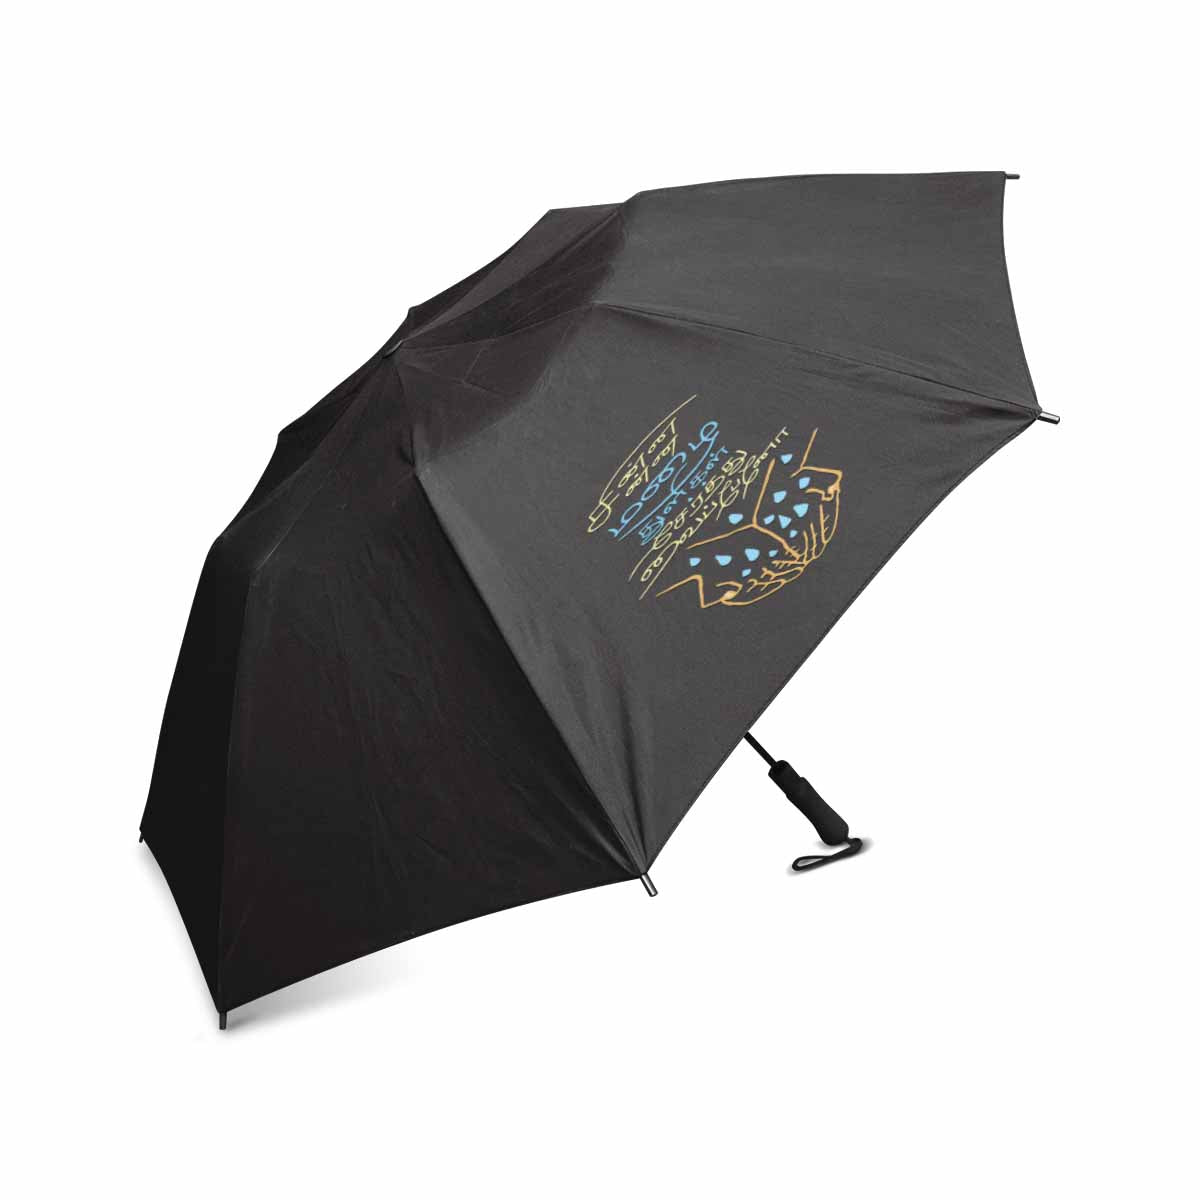 Black Thamizh semi automatic foldable umbrella 42 inch Chinna Chinna Mazhaithuligal Serthuvaipaeno gift idea for friends and family